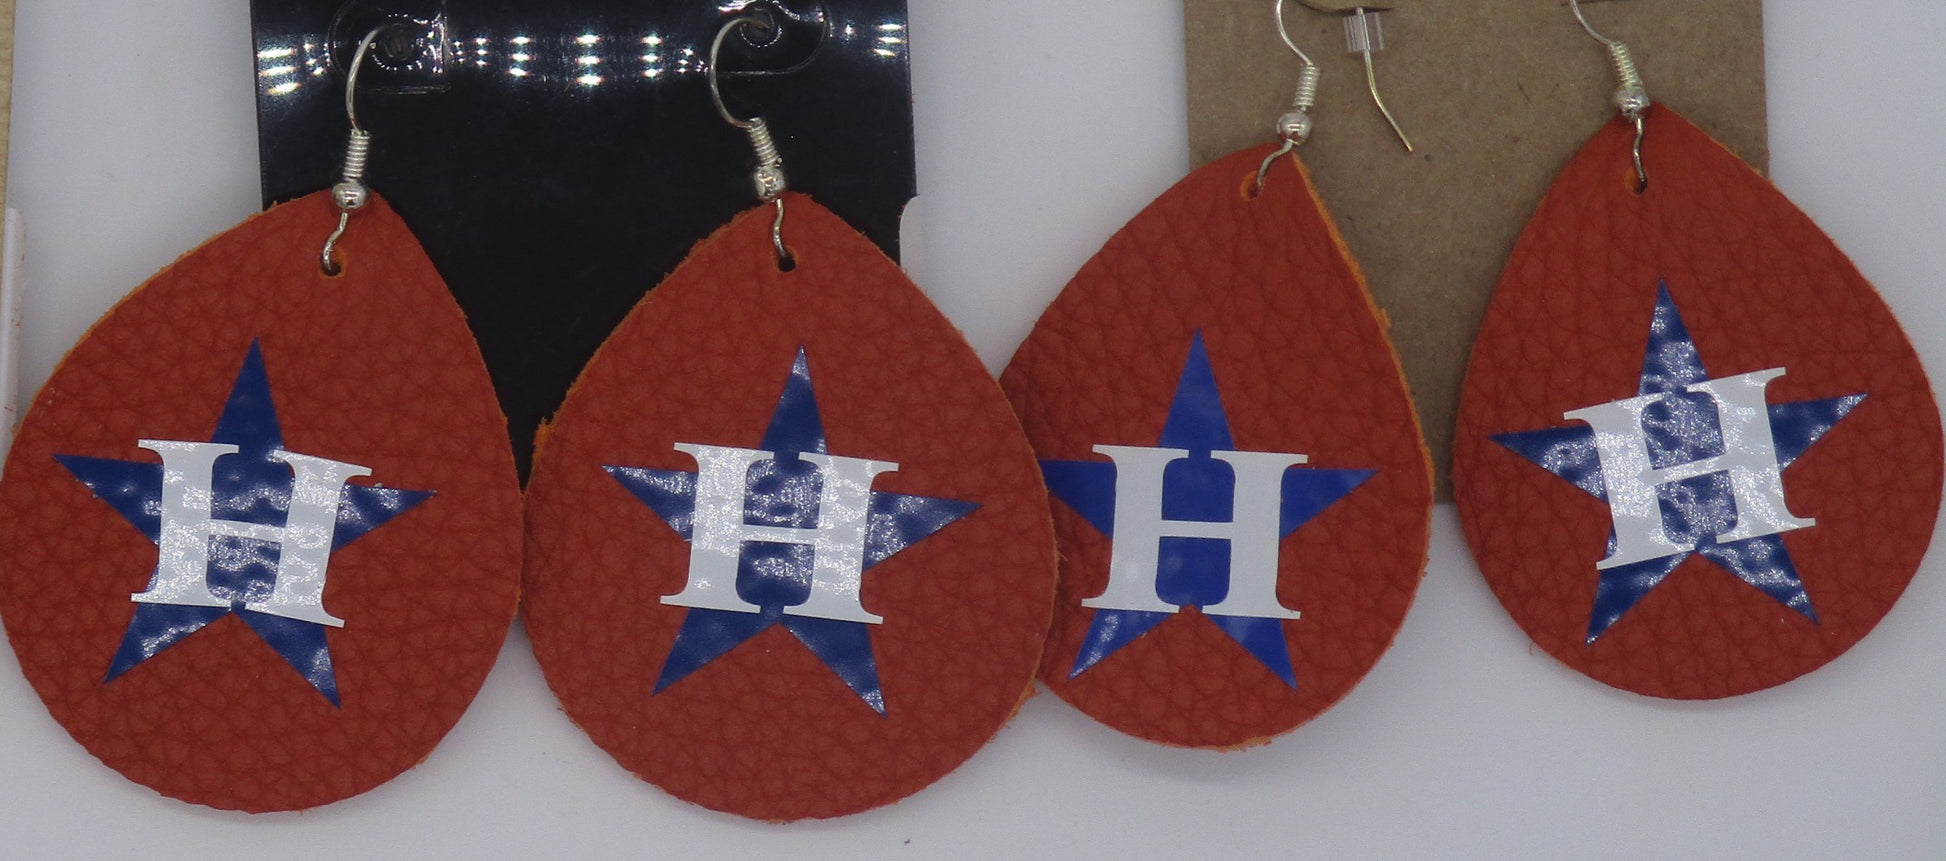 Tear drop shaped orange leather earrings with Houston Astros logo